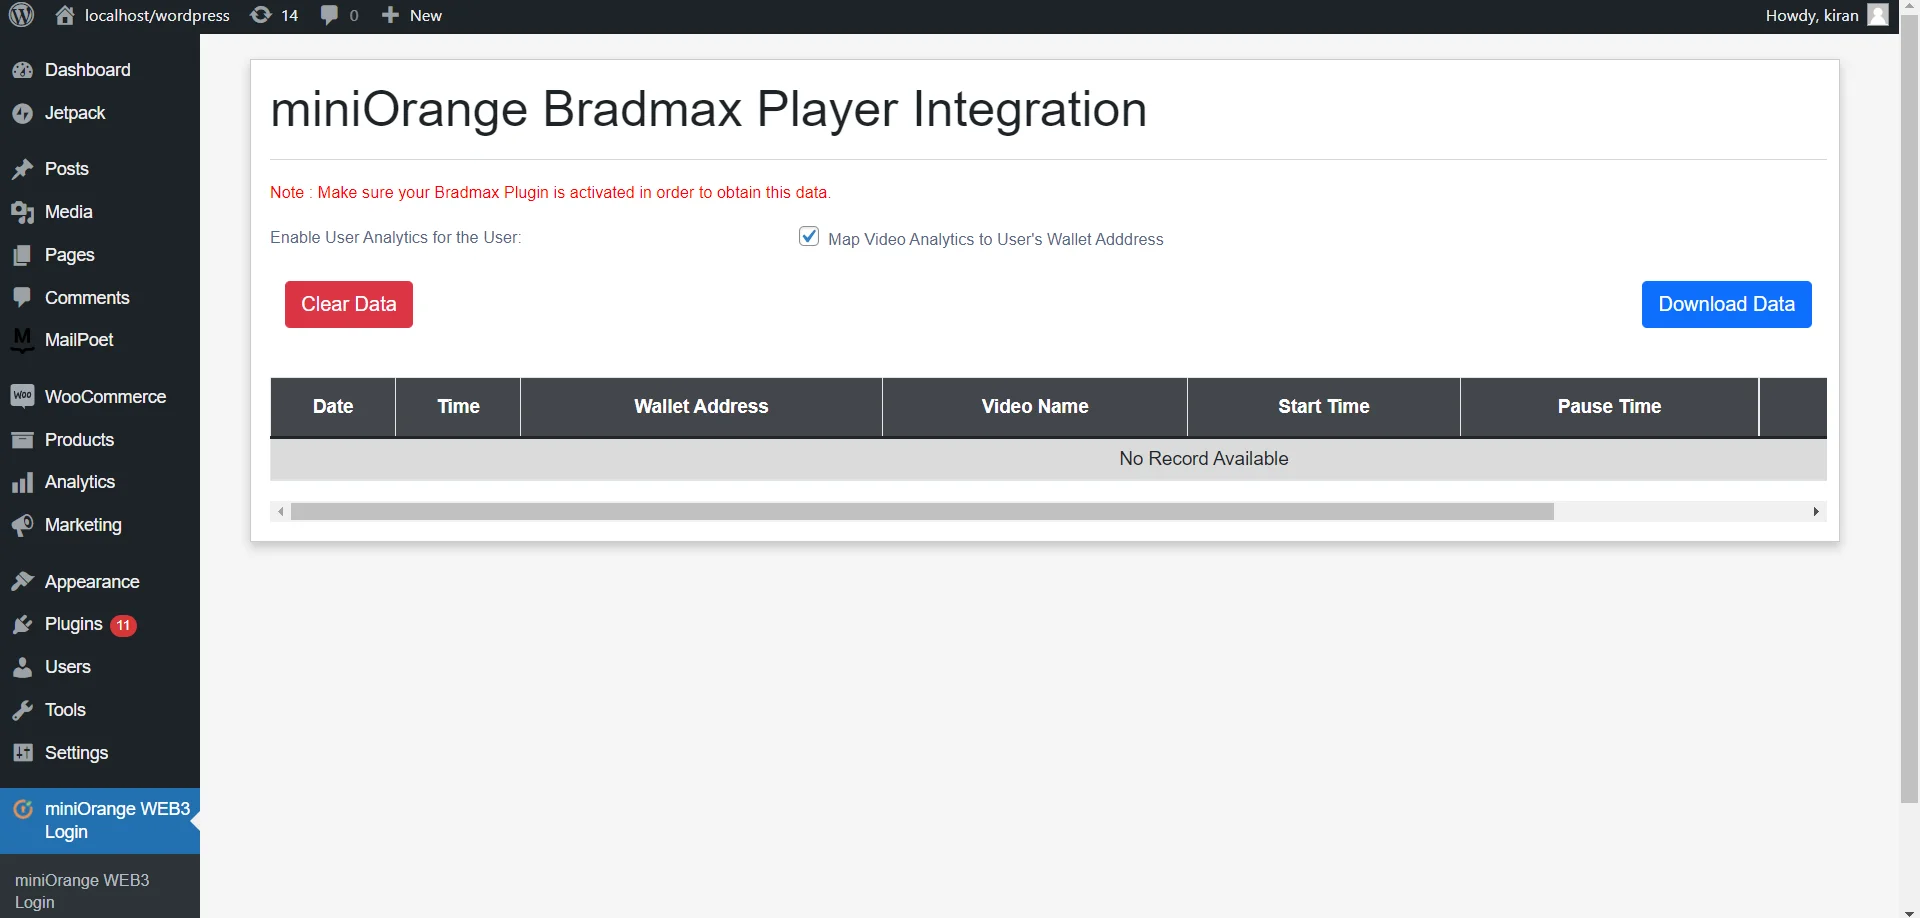 WordPresss Web3 login Bradmax Player integration addon 